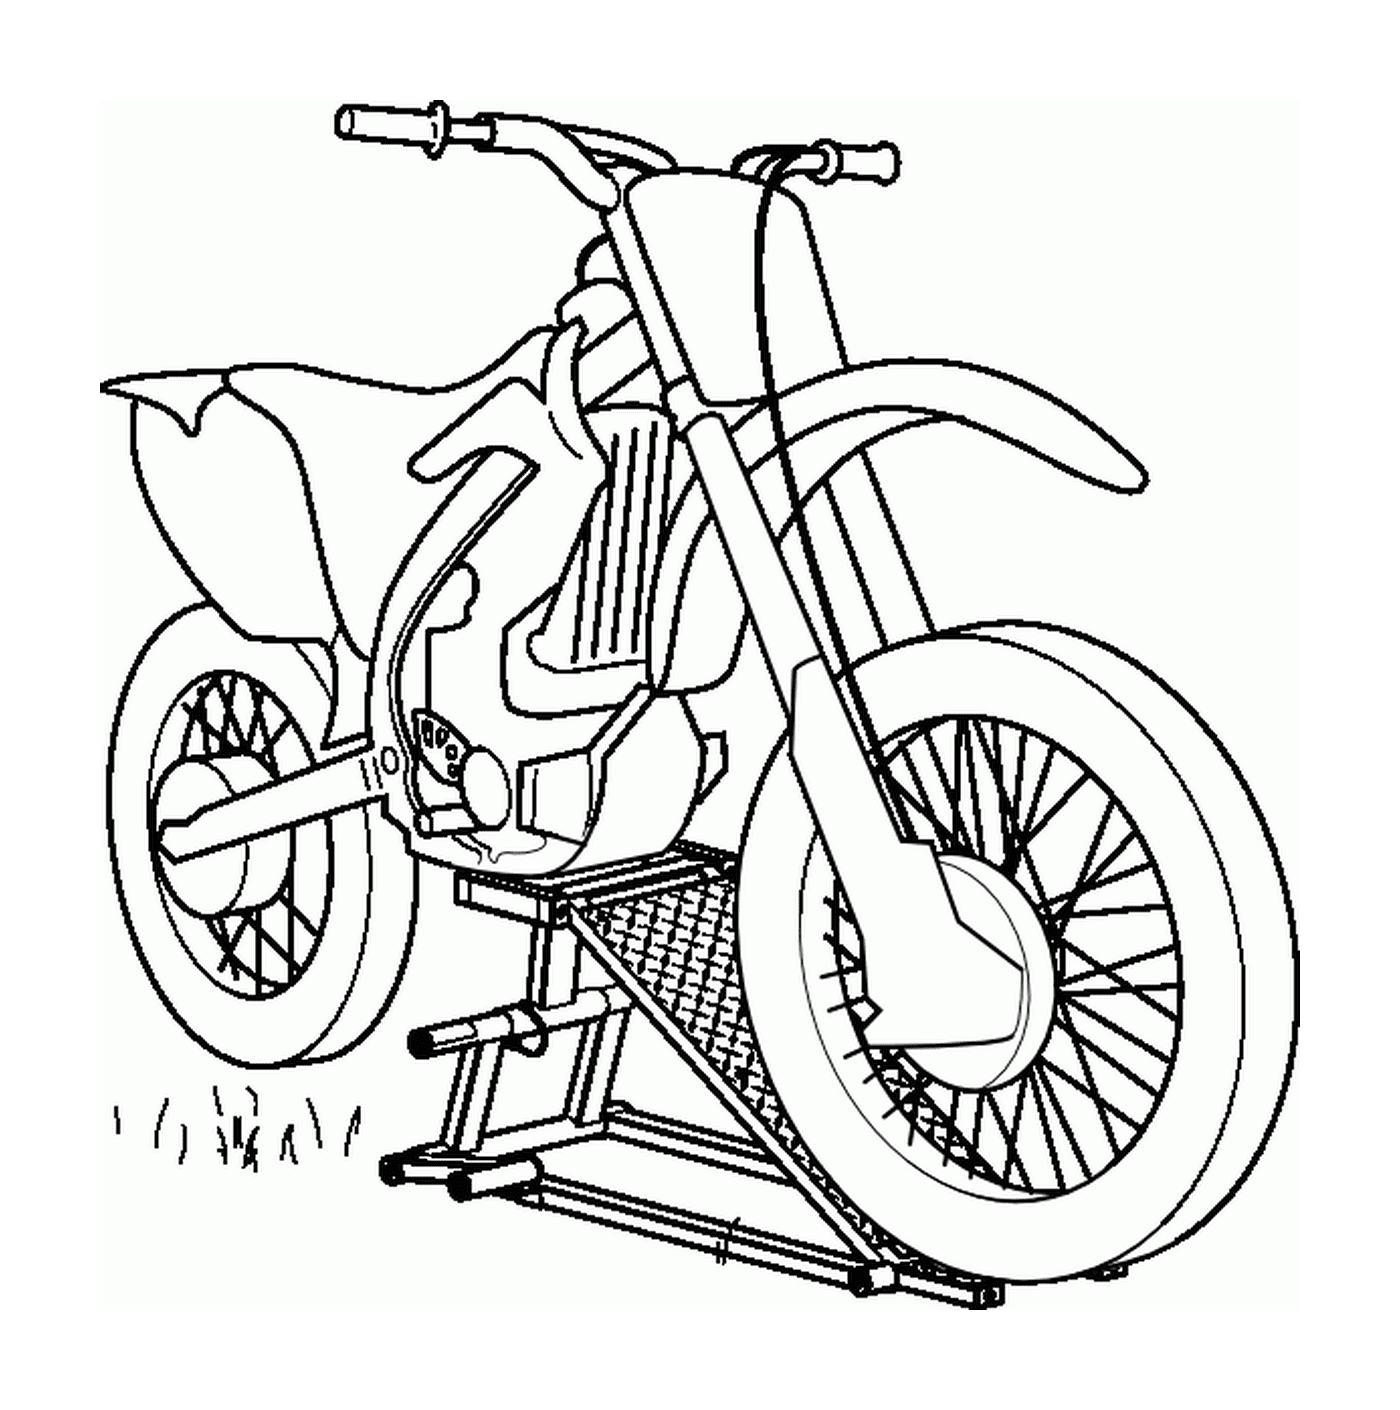  All-terrain motorcycles 